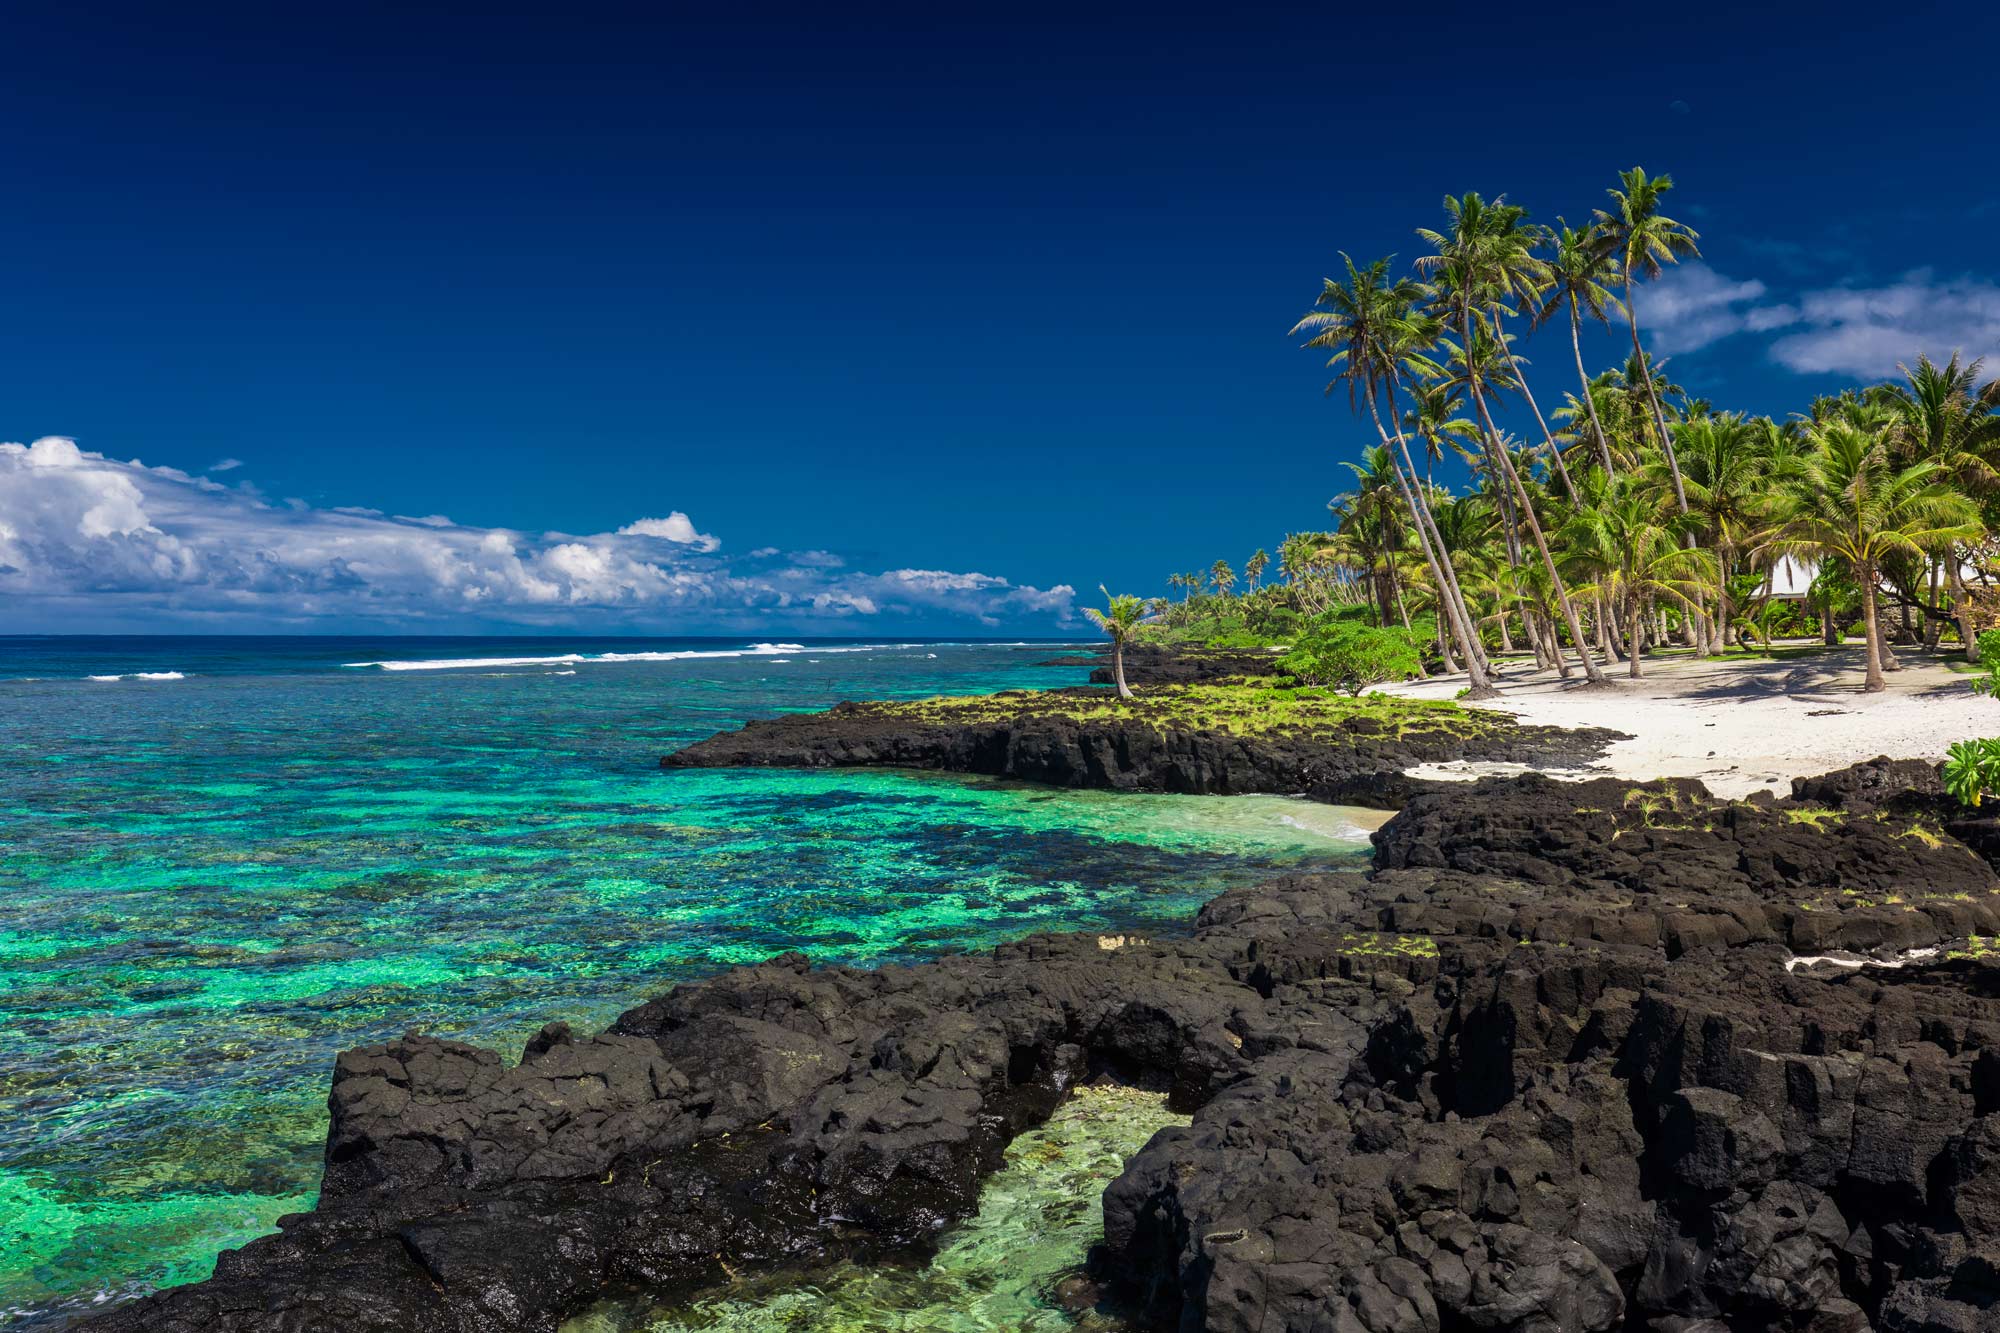 Radio Free Asia: Public hearing in American Samoa underscores opposition to marine sanctuary plan